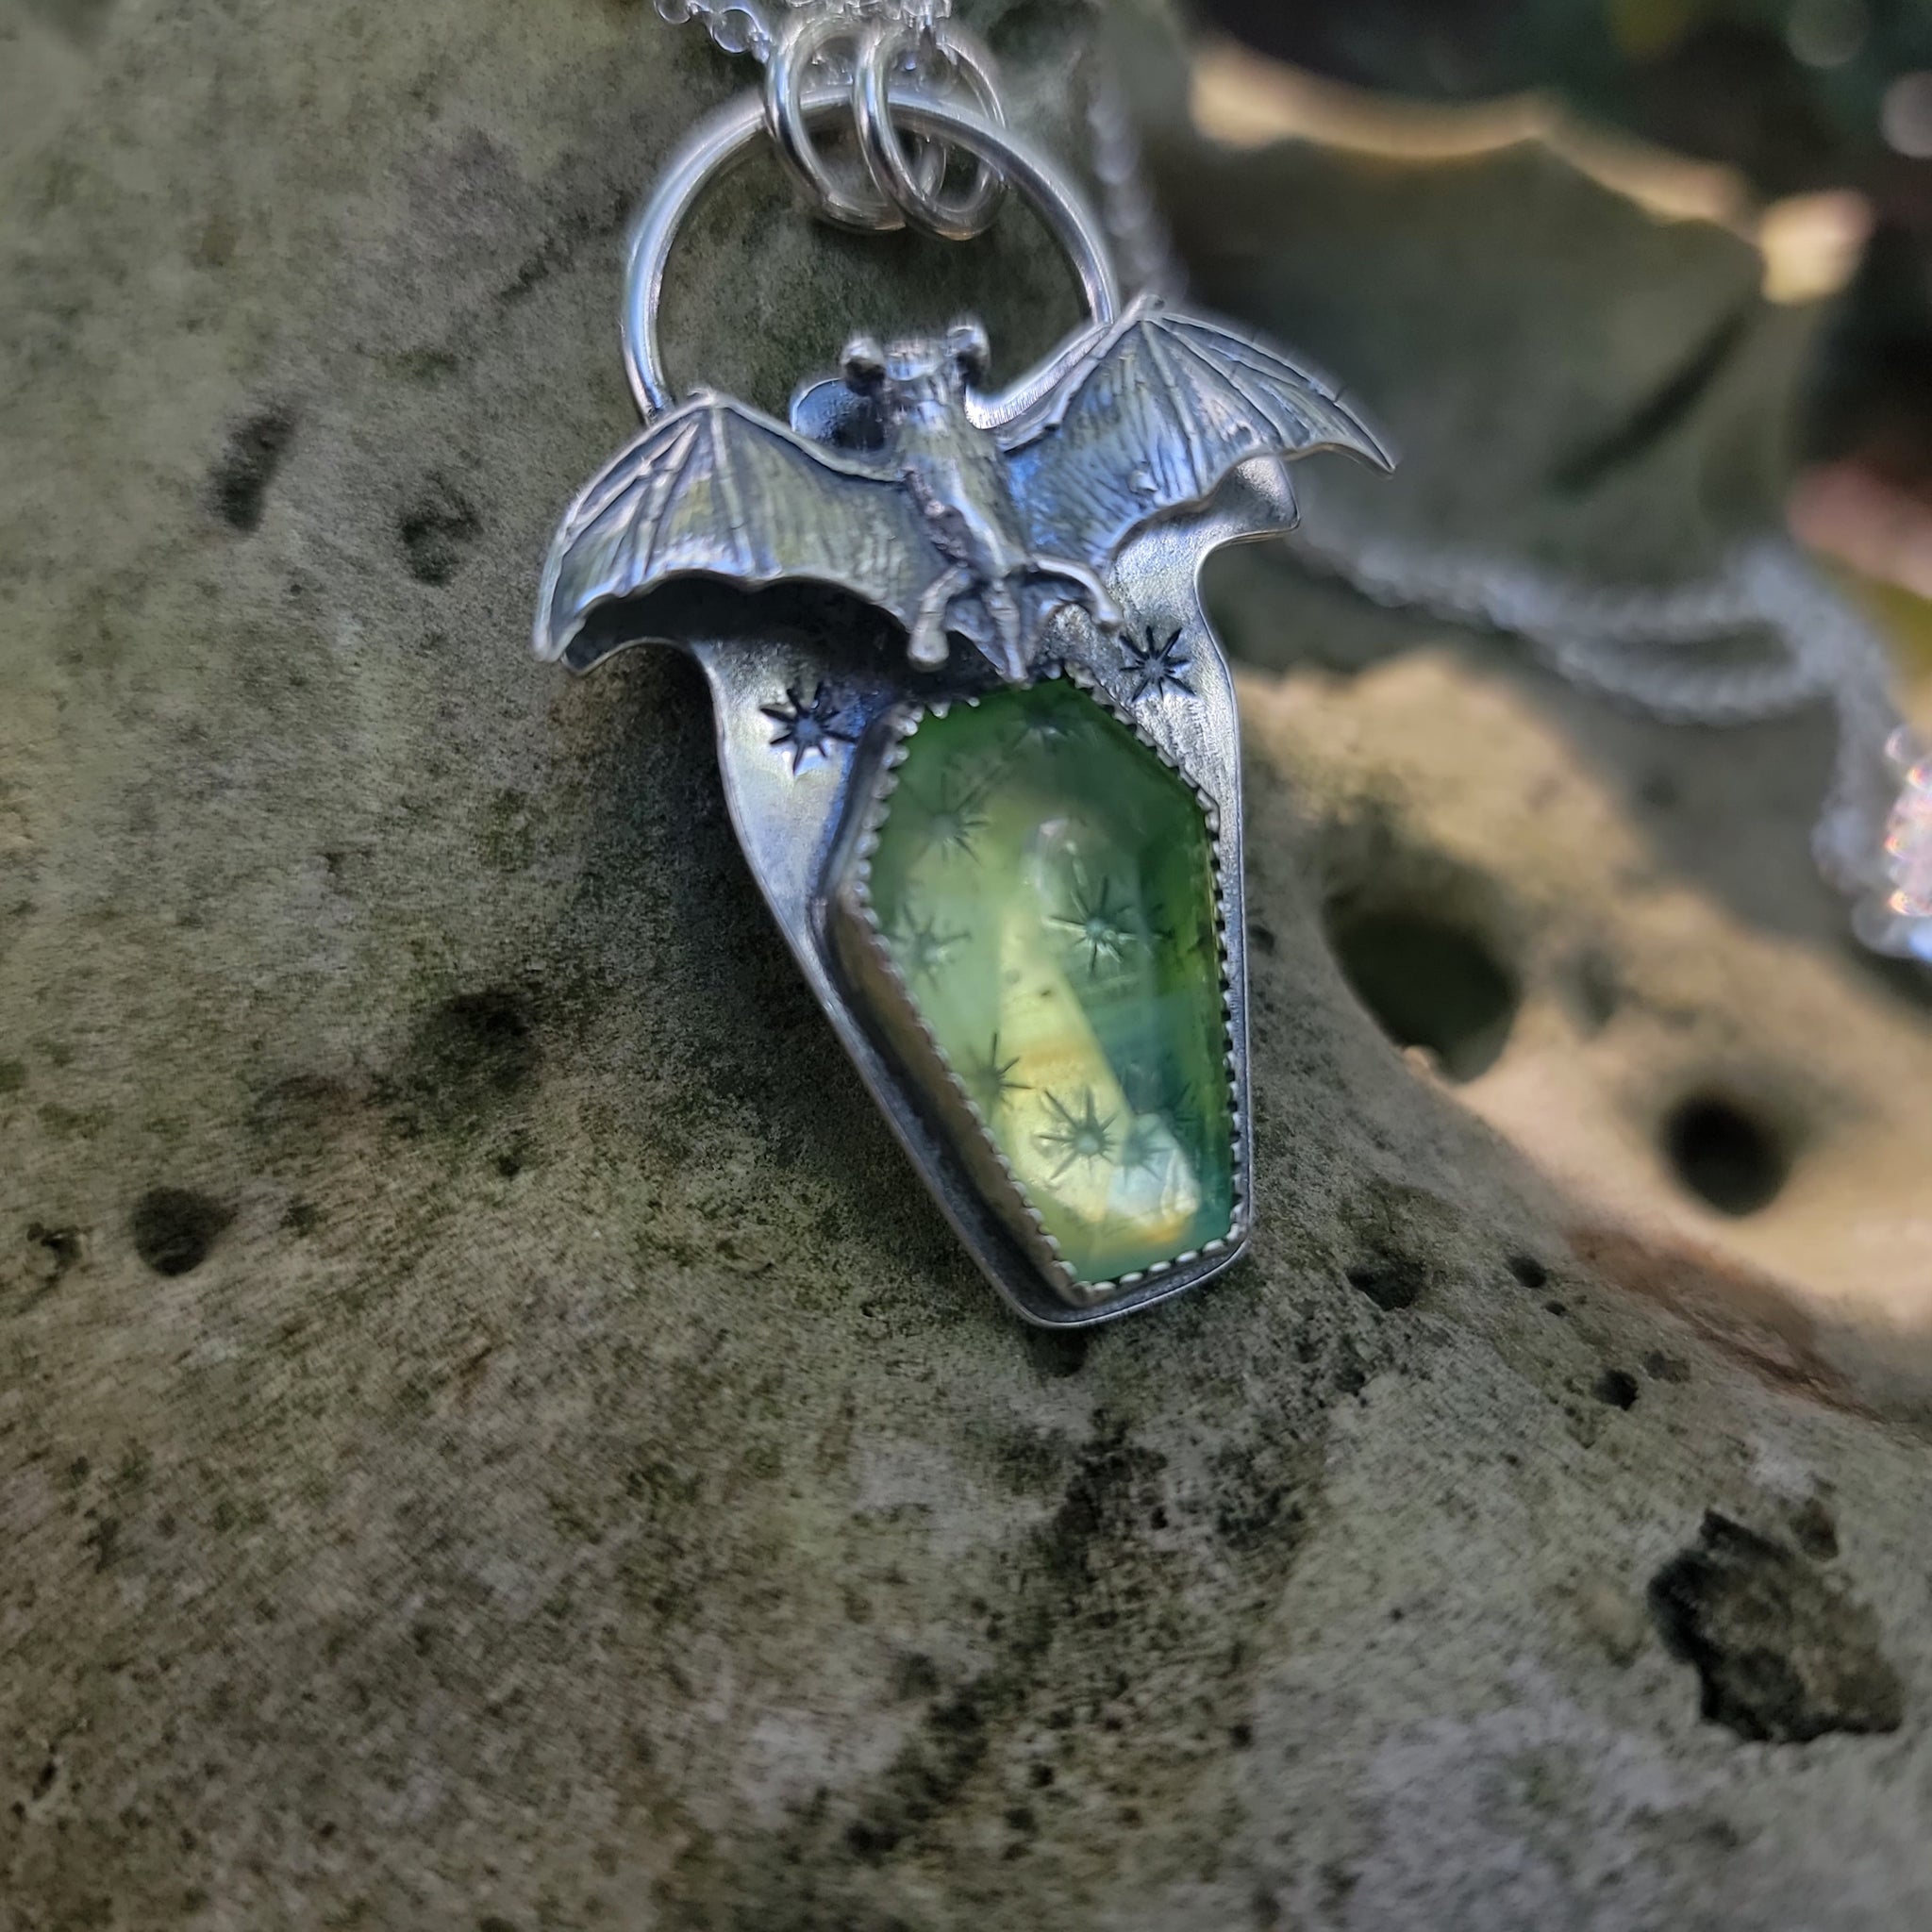 Fluorescent Uranium Glass Flying Bat Pendant in Sterling Silver